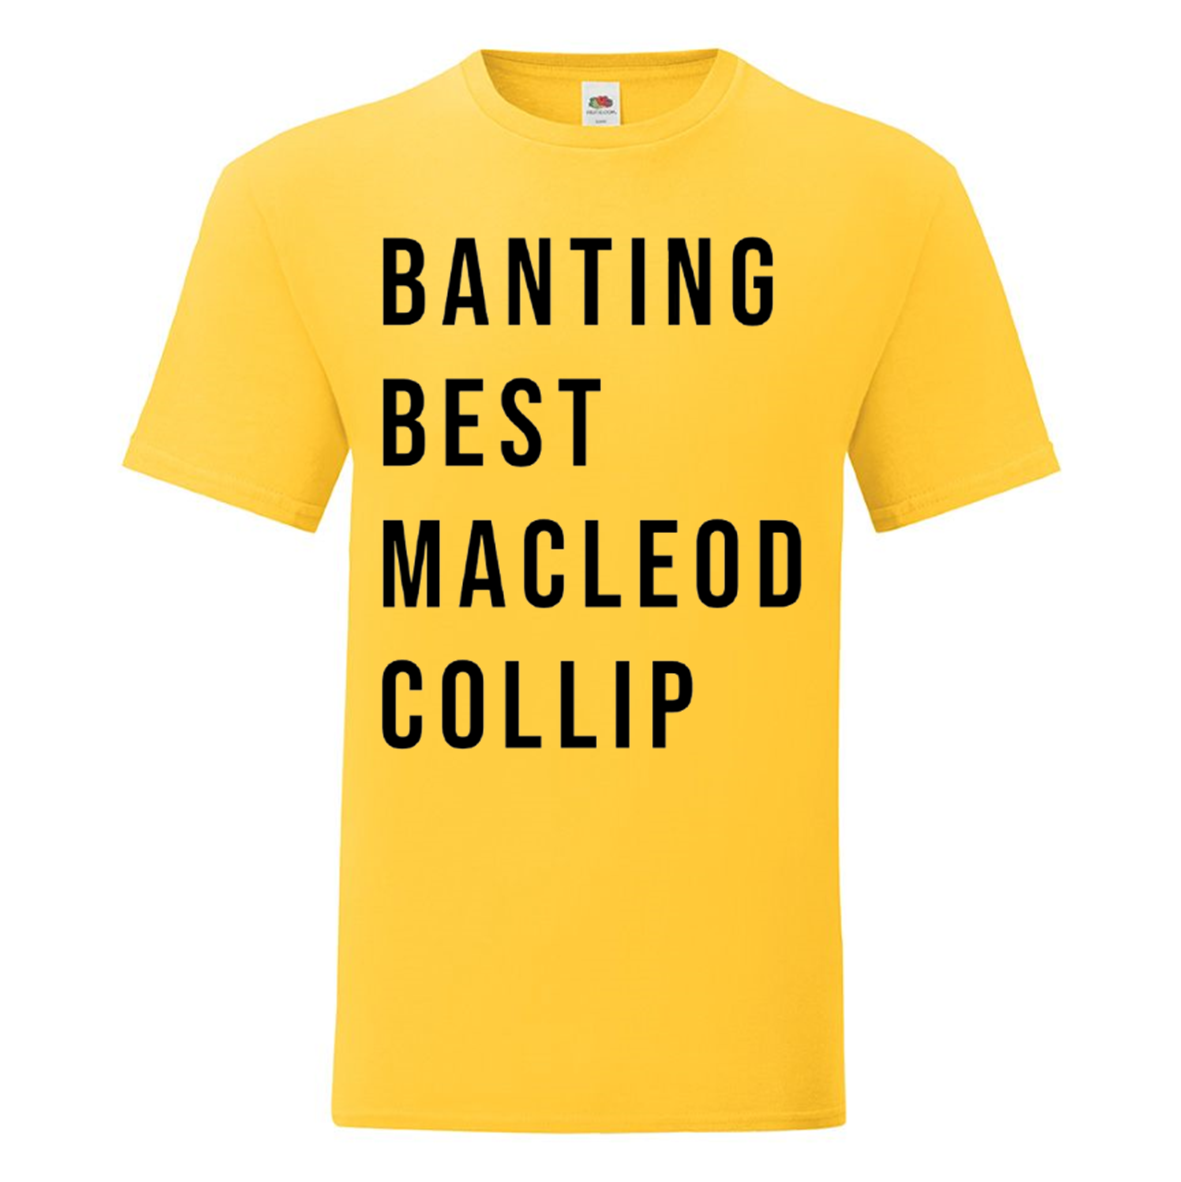 Banting, Best, Macleod & Collip T Shirt